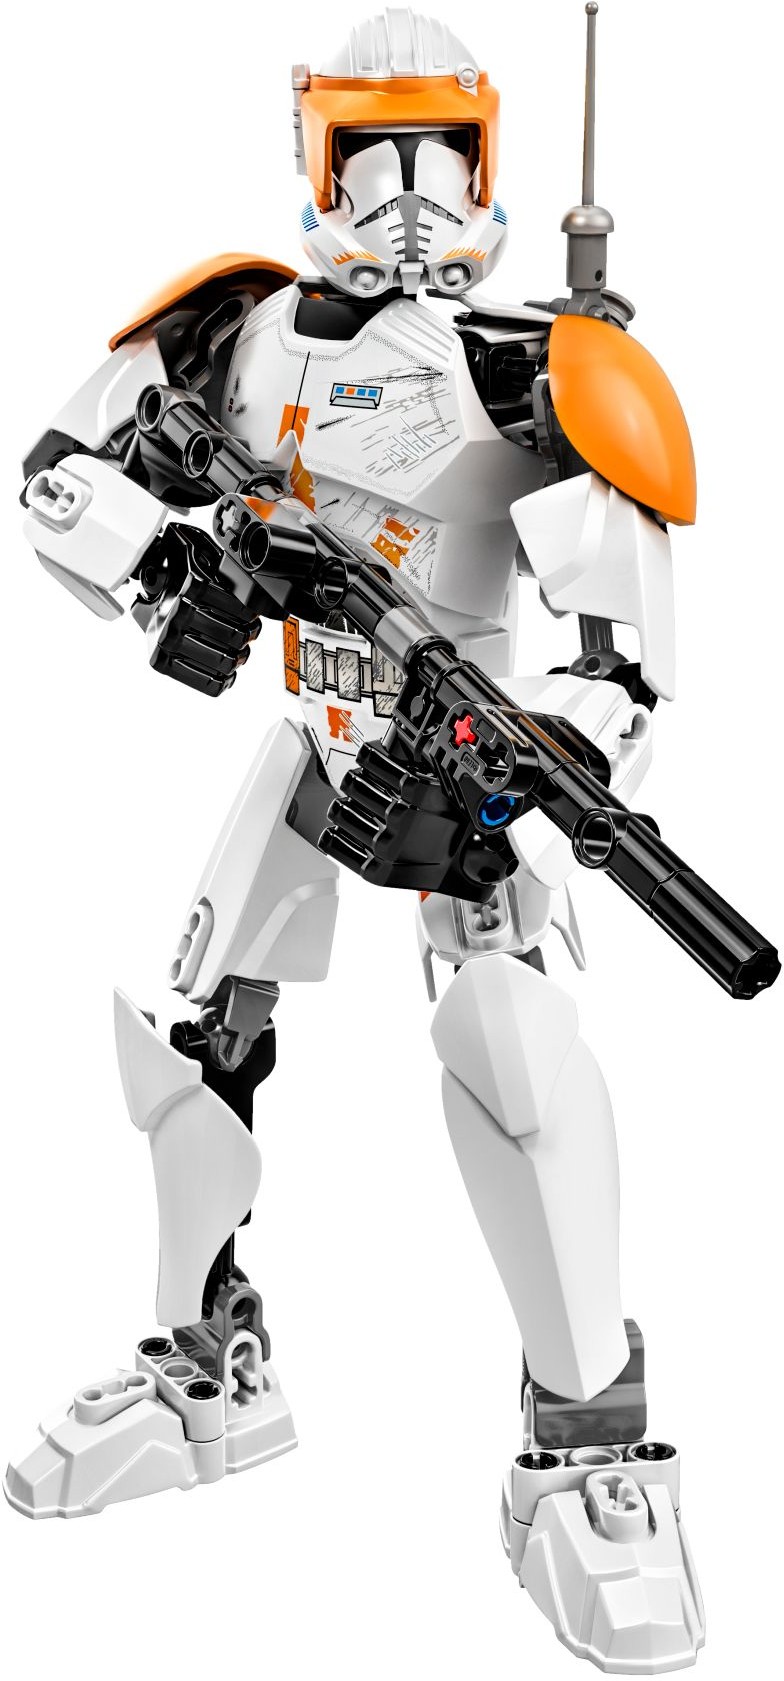 LEGO Wars Buildable Figures | Brickset